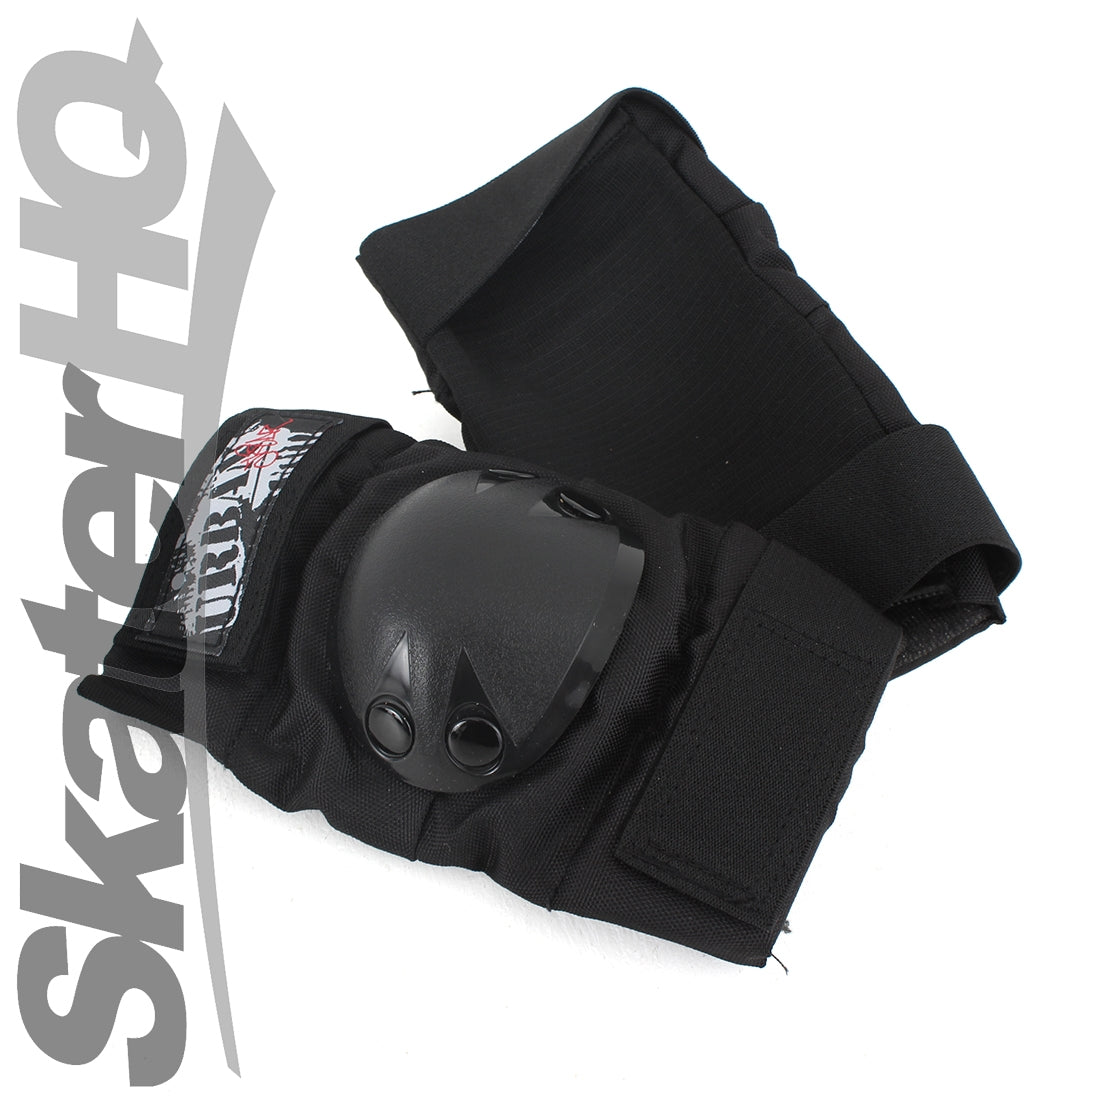 Urban Skater Tri Pack Black - XLarge Protective Gear